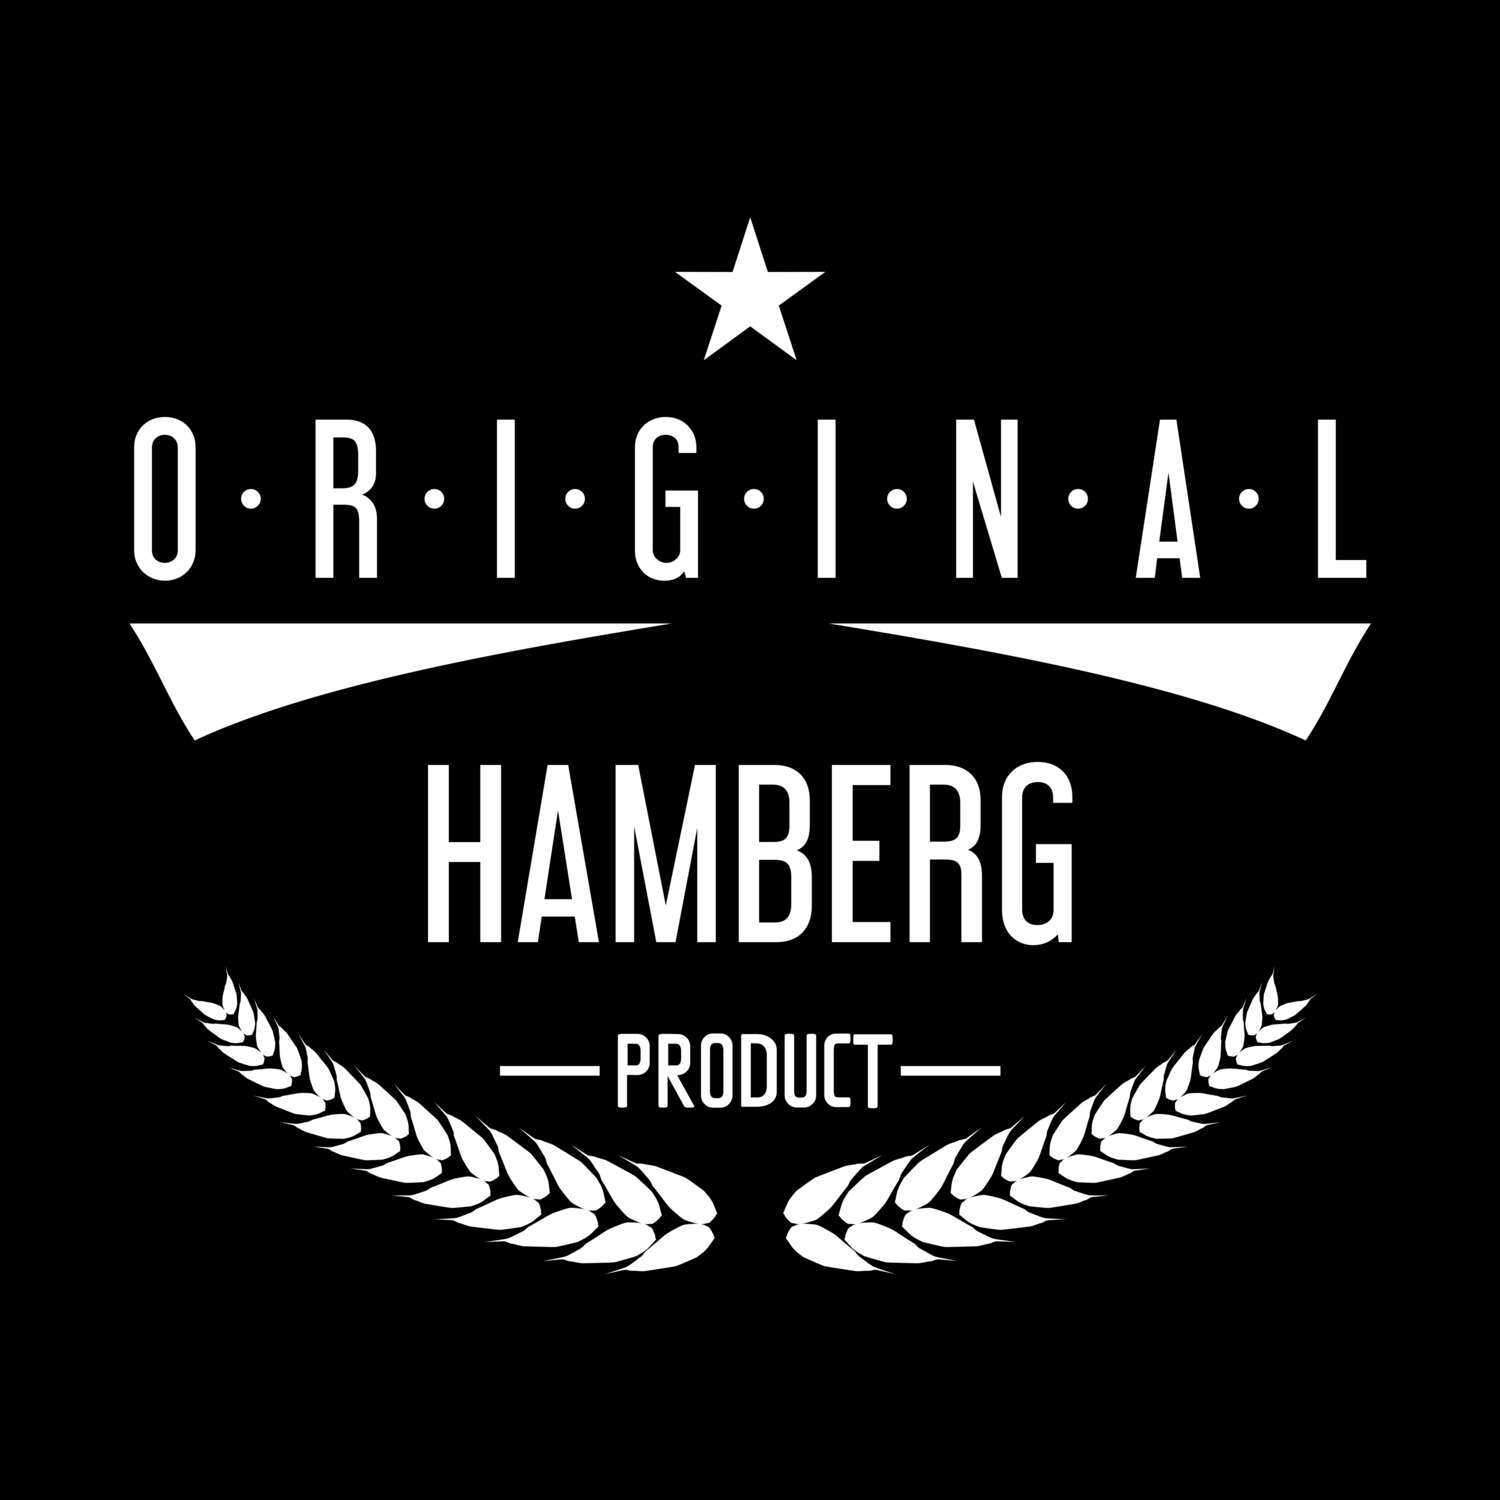 Hamberg T-Shirt »Original Product«